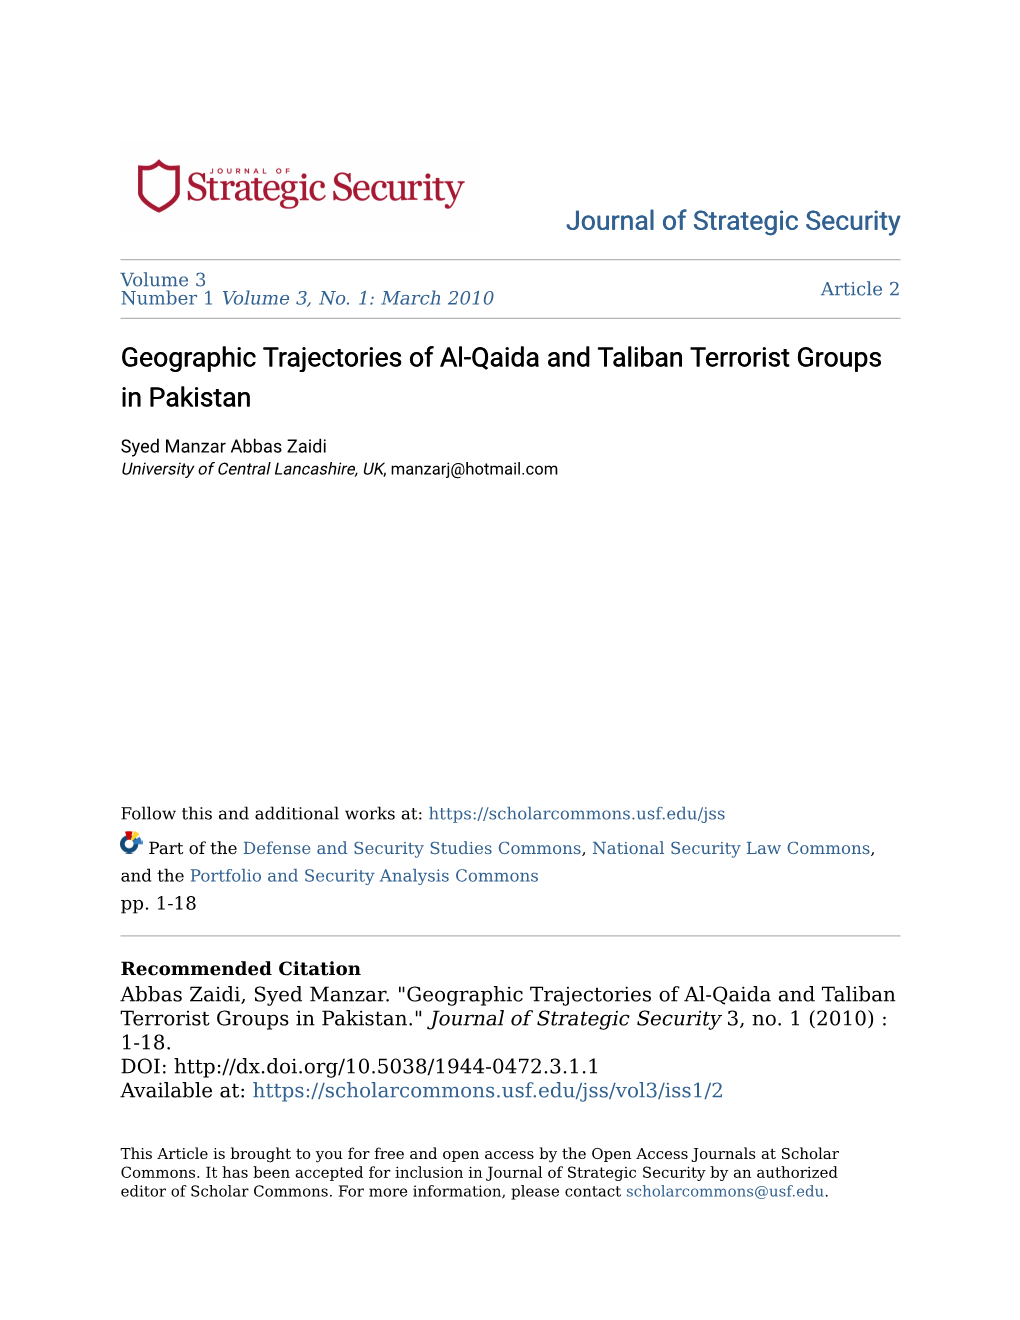 Geographic Trajectories of Al-Qaida and Taliban Terrorist Groups in Pakistan